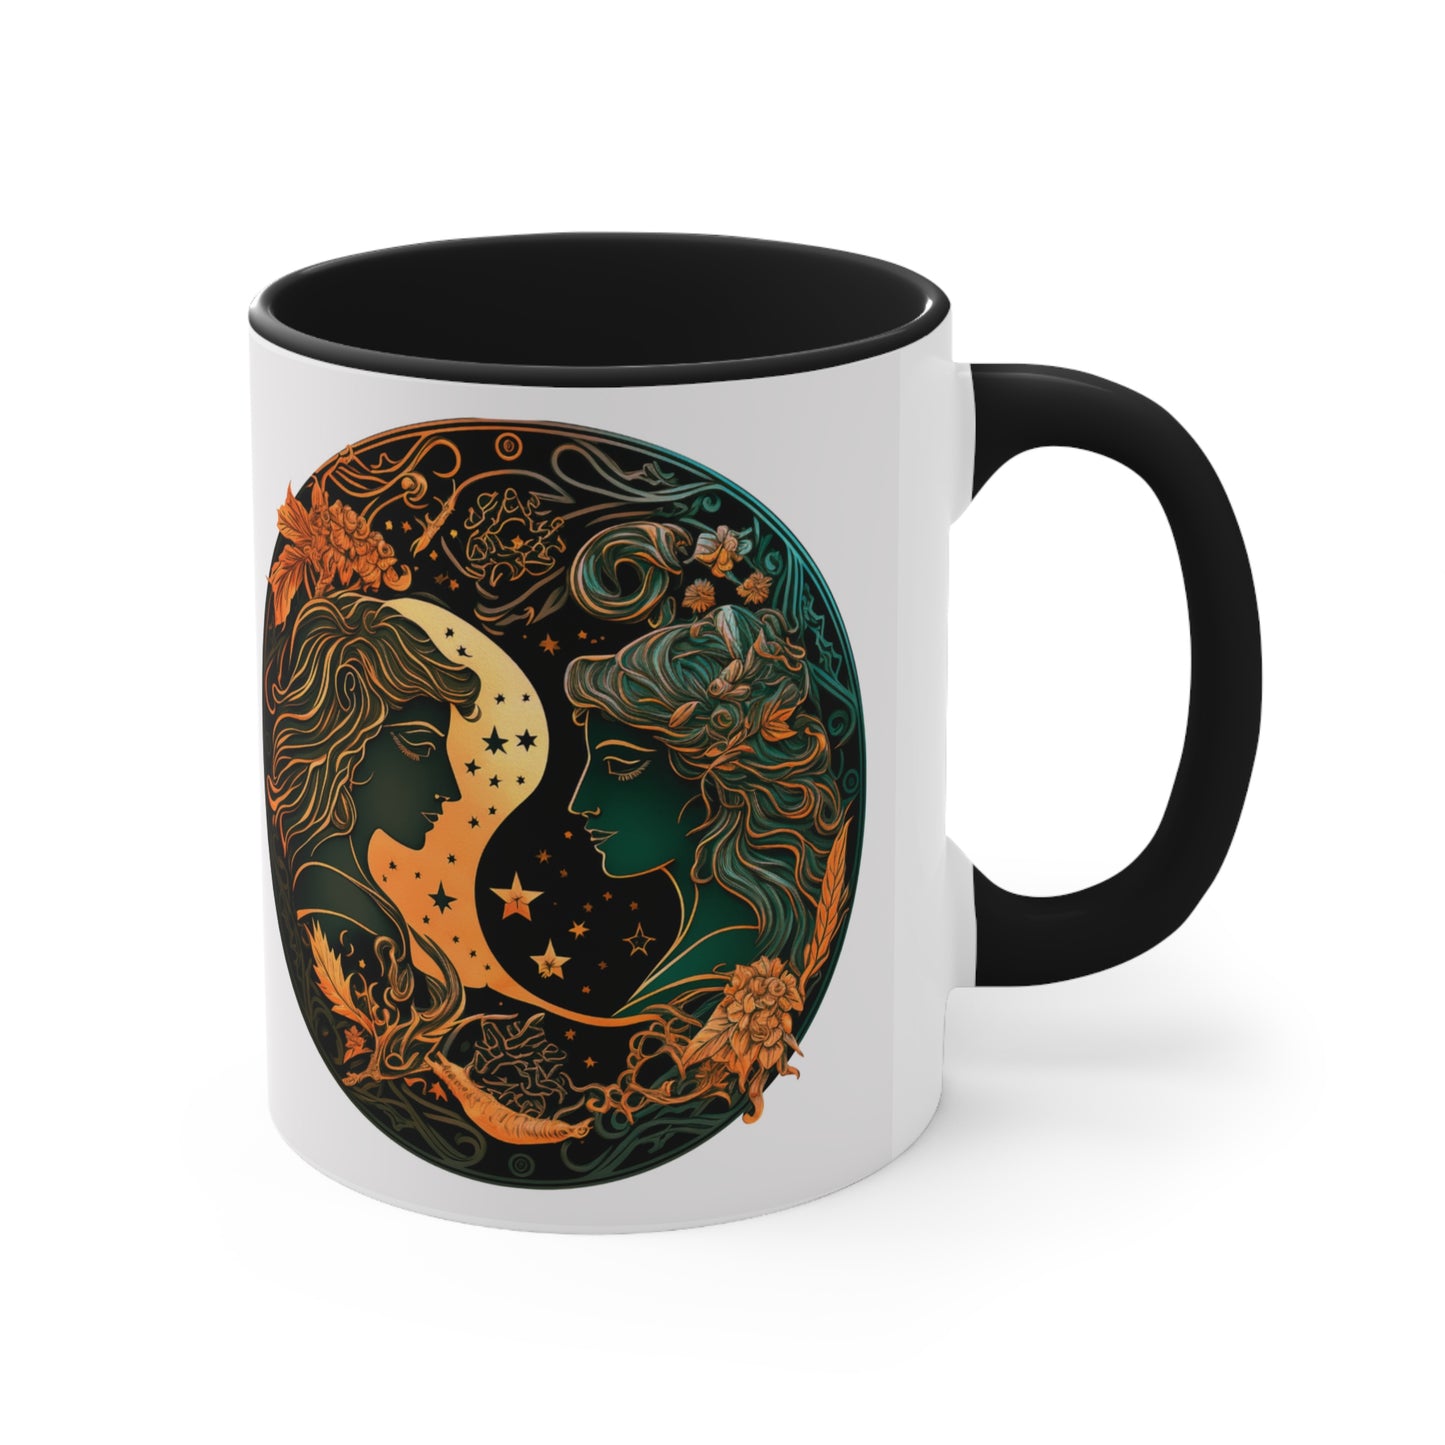 Gemini Coffee Mug, Astrology Coffee Mugs, Zodiac Coffee Mugs, Gifts for Him, Gifts for Her, Black Coffee Mug, Accent Coffee Mug, 11oz